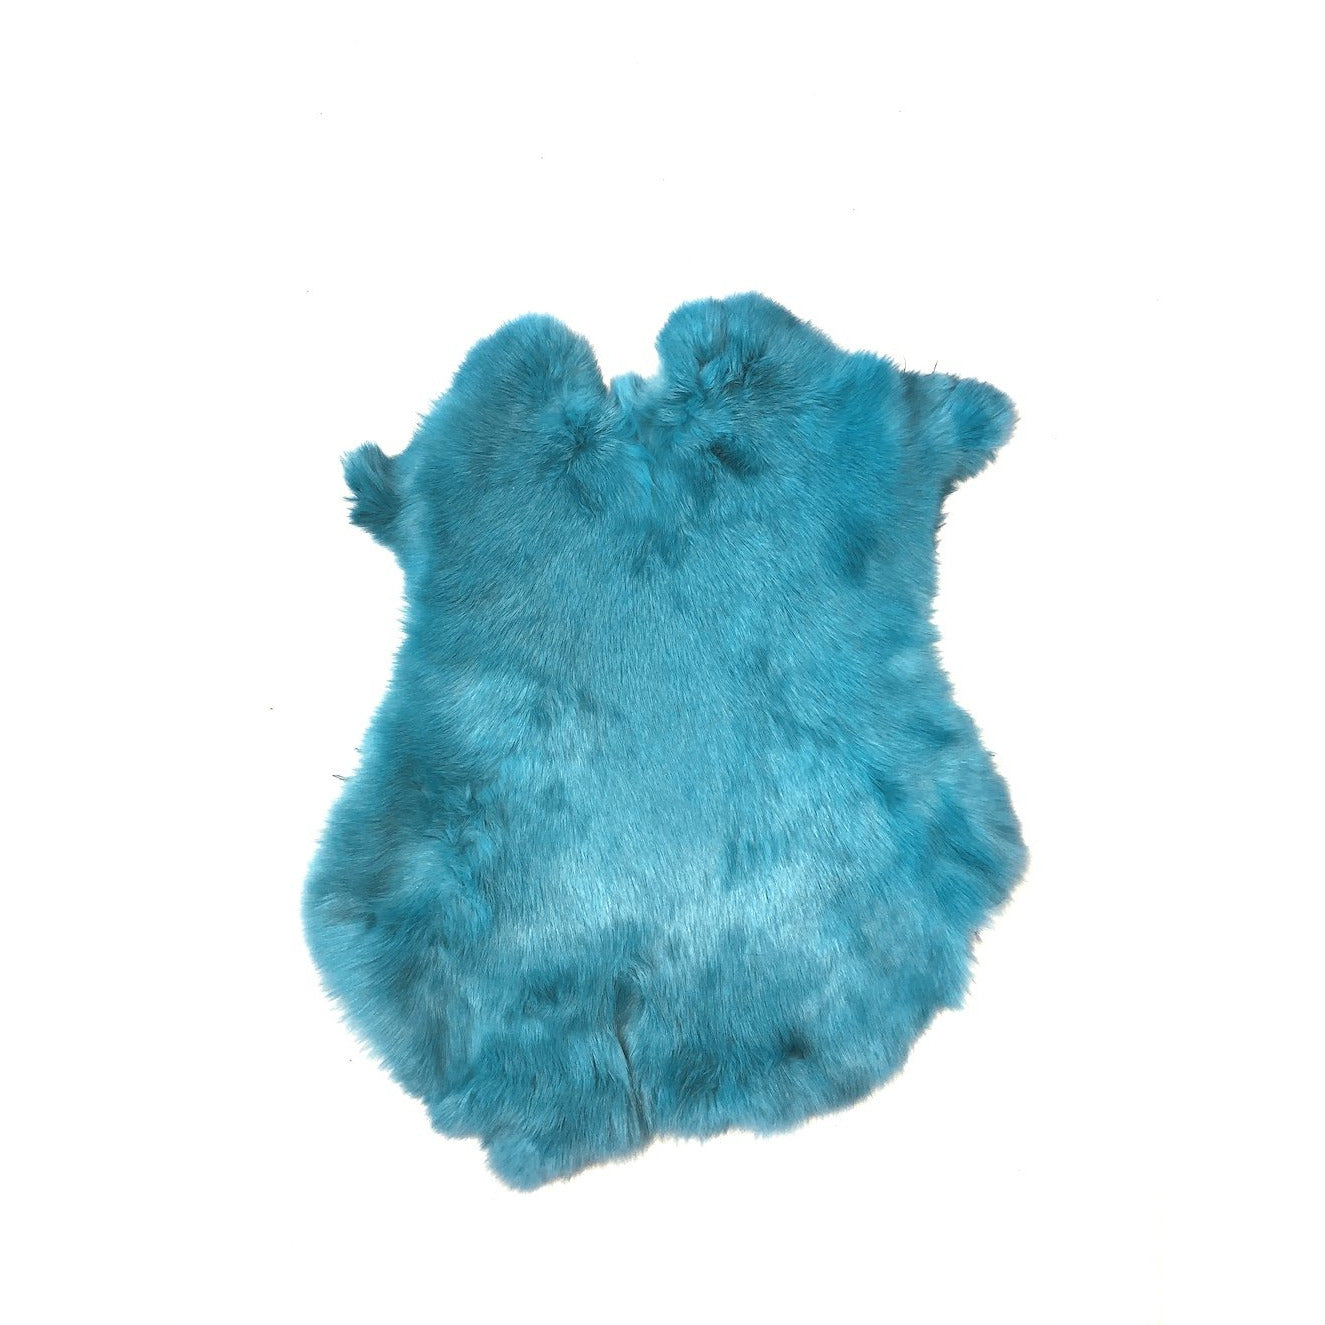 Teal Dyed Rabbit Fur - SL Fur & Leather